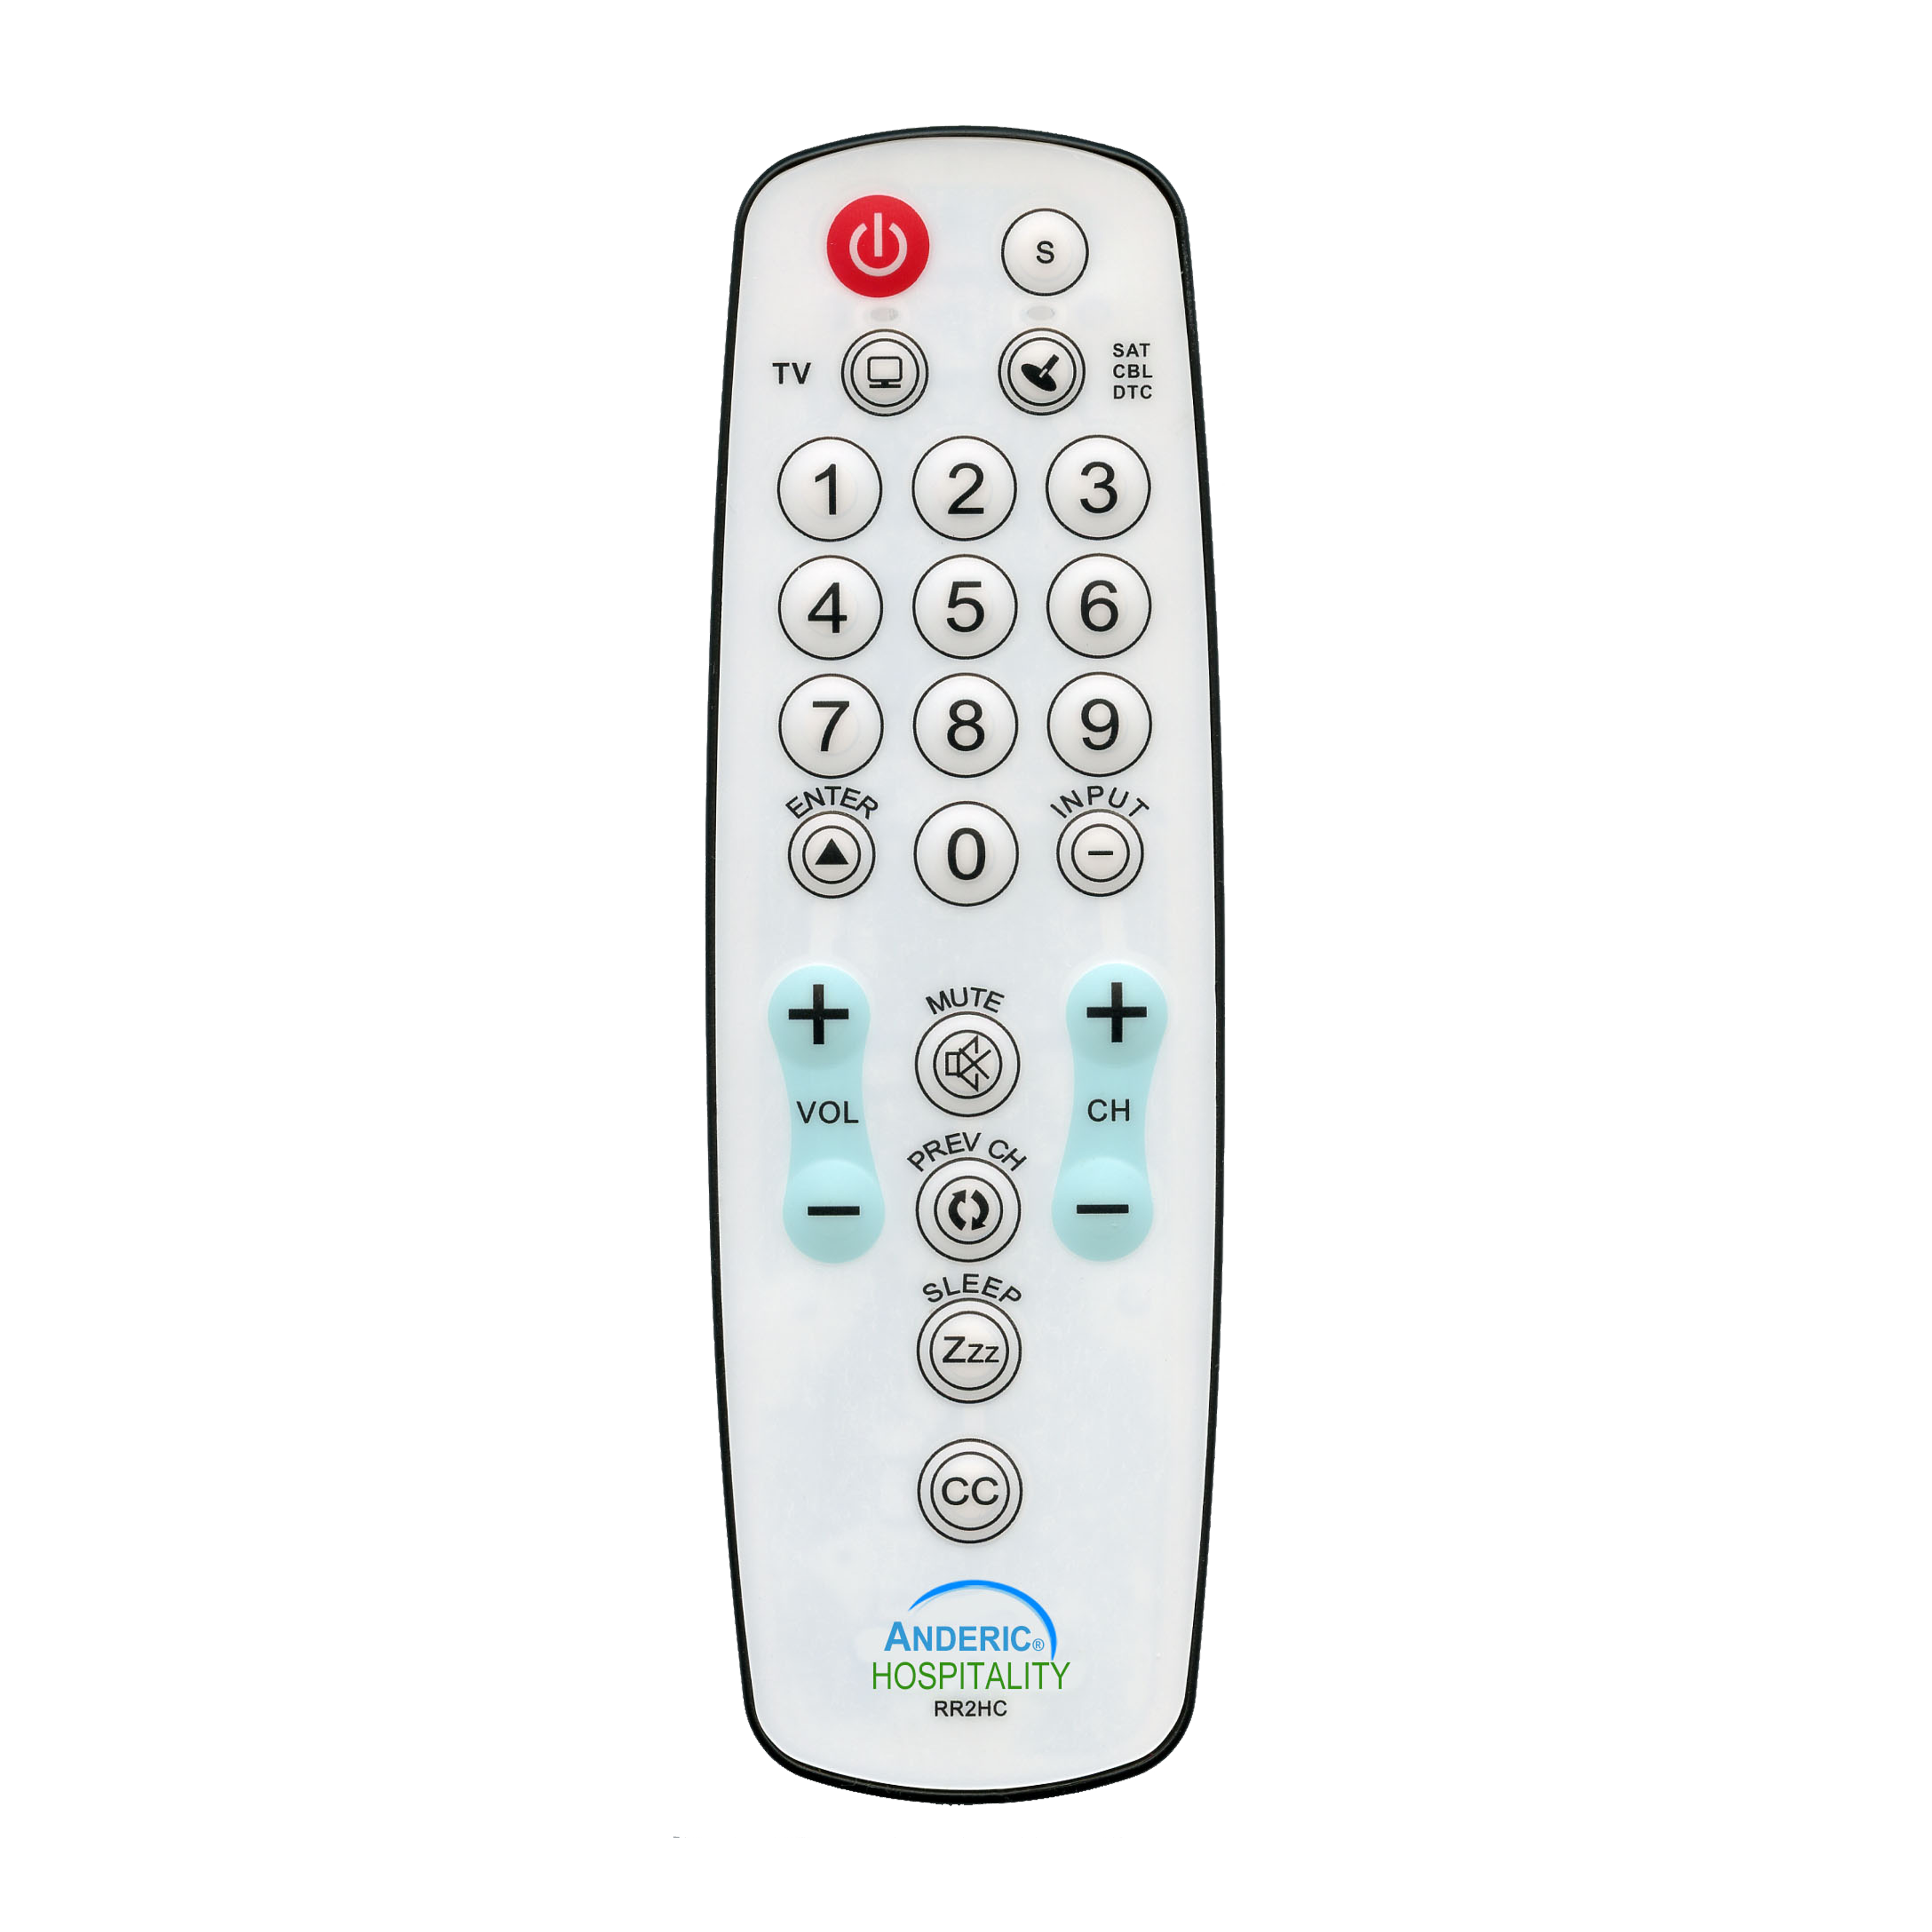 NEW REMOTE CONTROL FOR Edenwood SMART TV  ED50C00UHD-VE.ED55C00UHD-VE.ED43C01UHD-VE.ED50C01UHD-VE.ED55C01UHD-VE  ED65C01UHD-VE - AliExpress